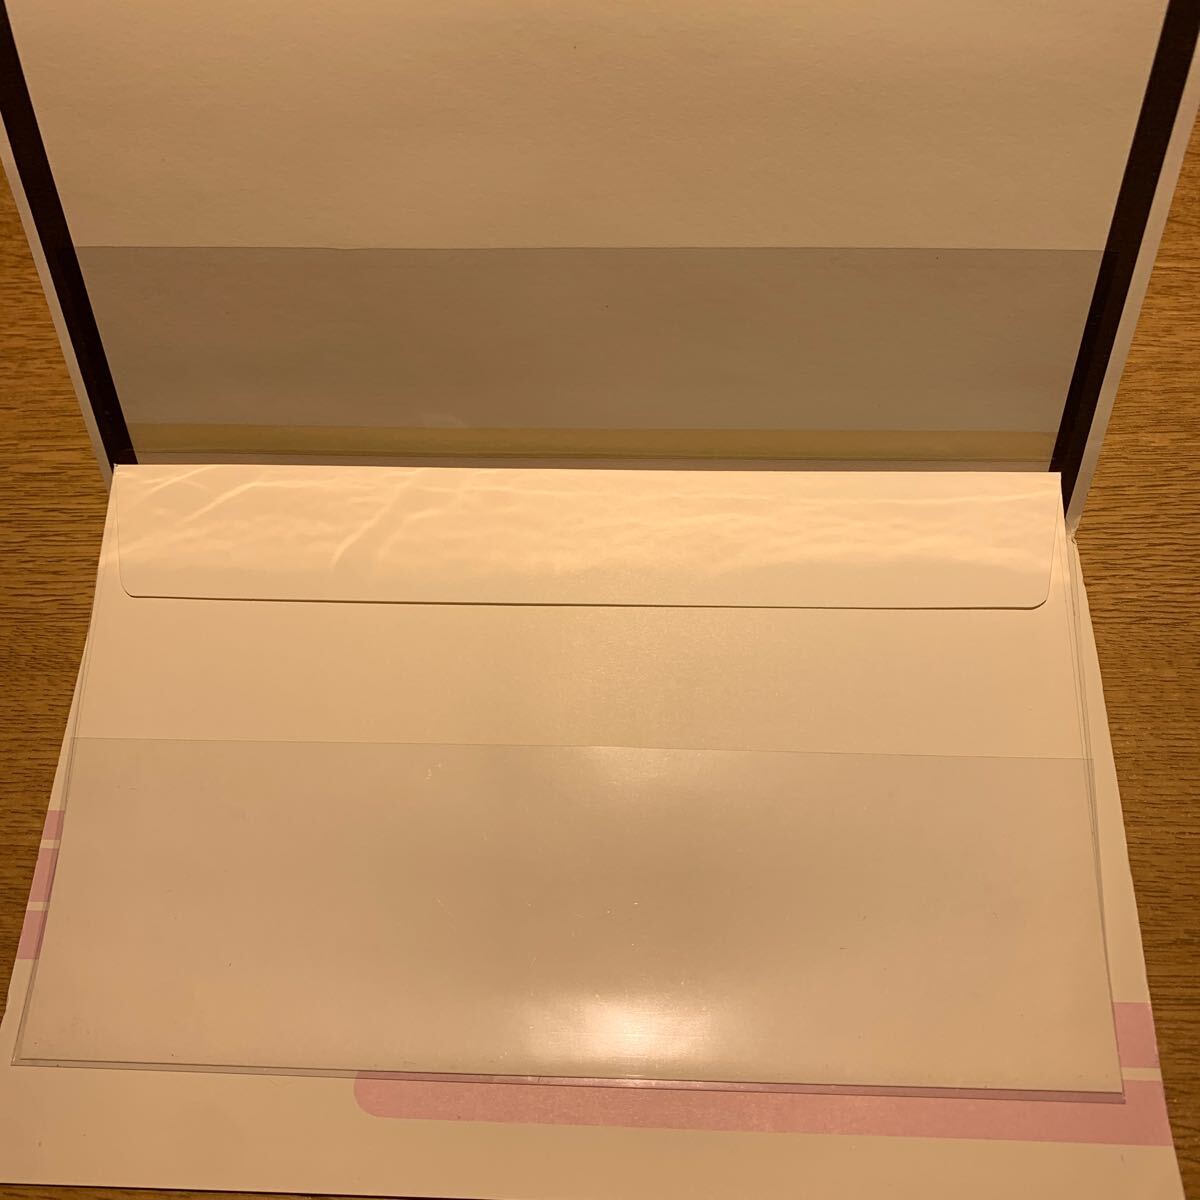 初日カバー 皇太子御成婚記念郵便切手 小型シート 平成5年発行の画像3